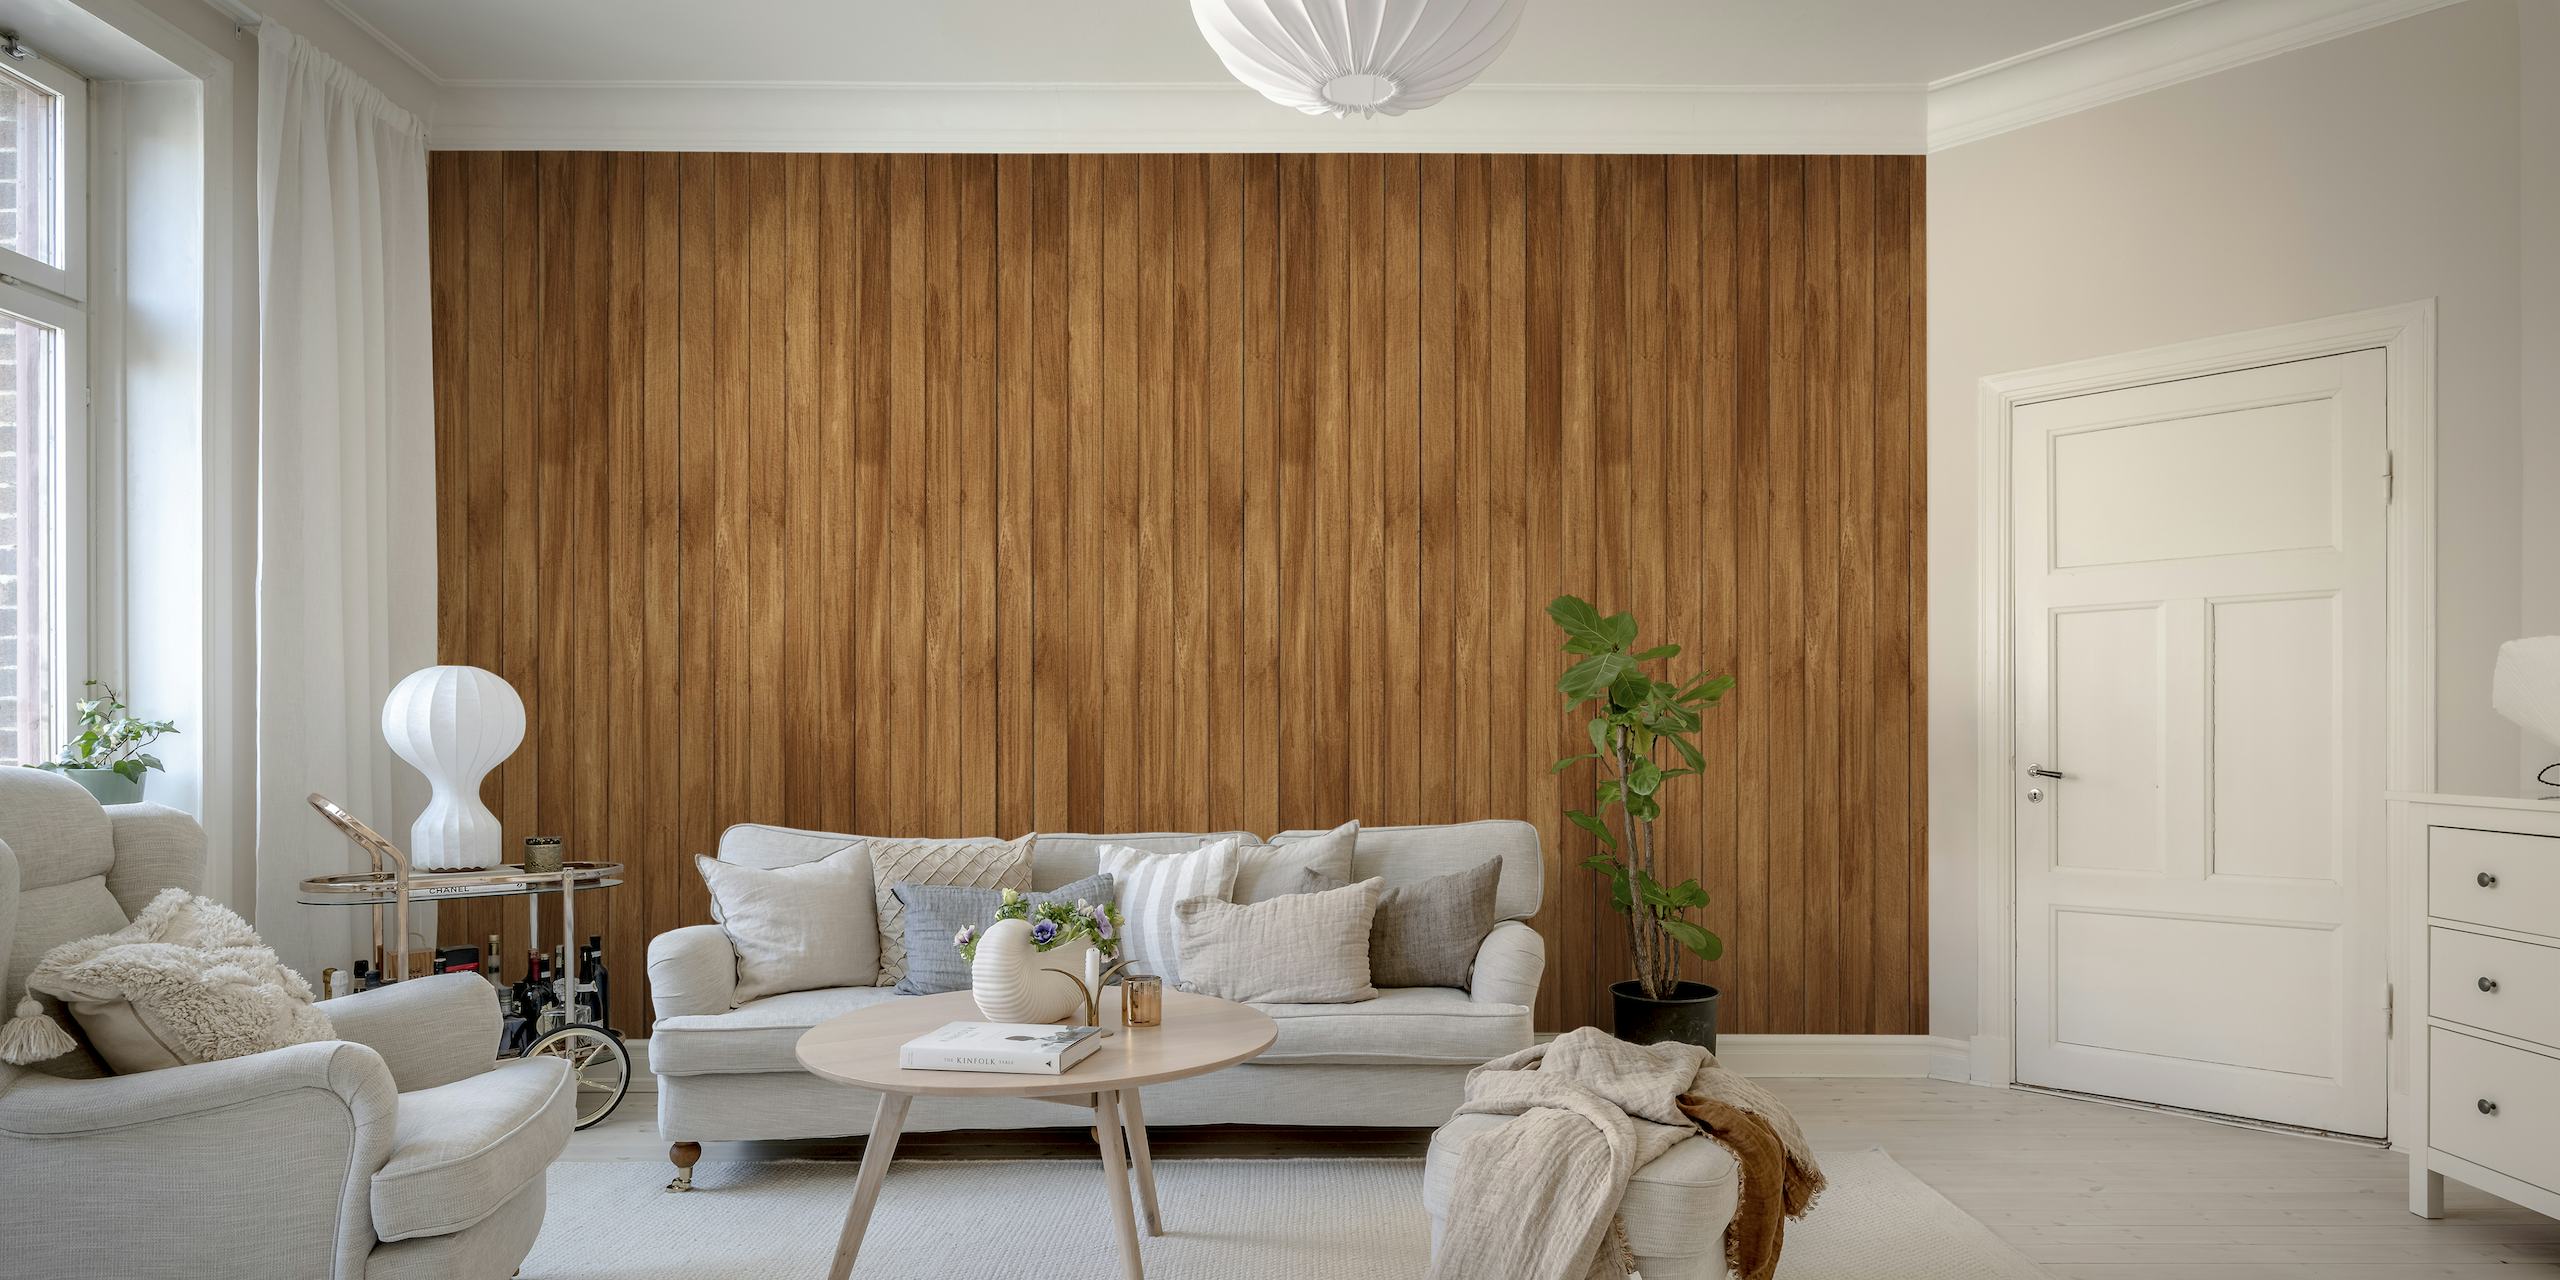 Mural de pared con textura de vetas de madera con ricos y cálidos tonos marrones para decoración de interiores.